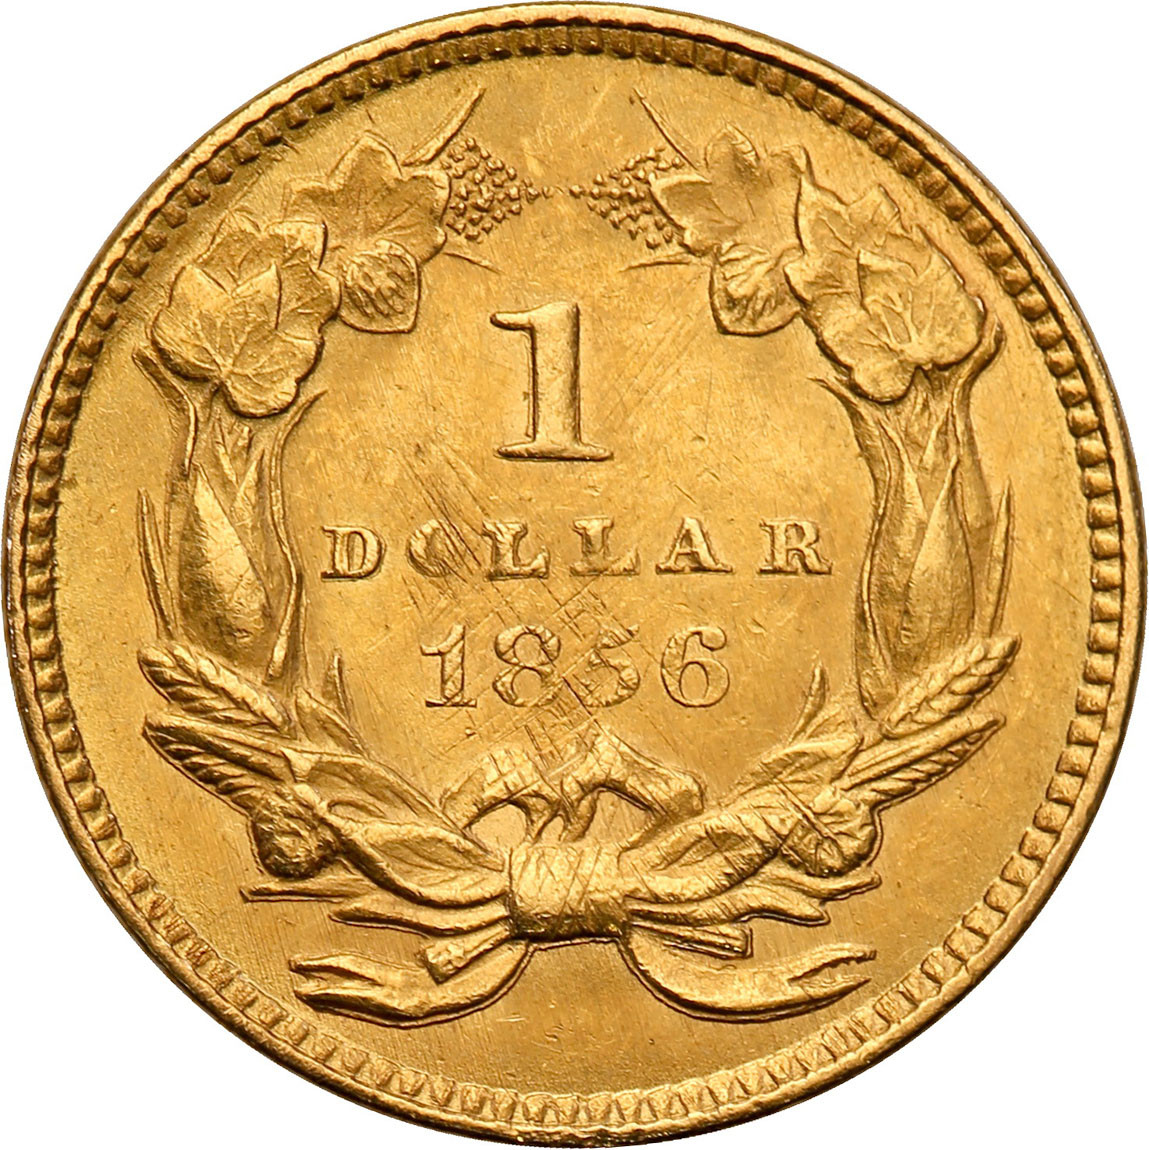 USA. 1 dolar 1856 typ III